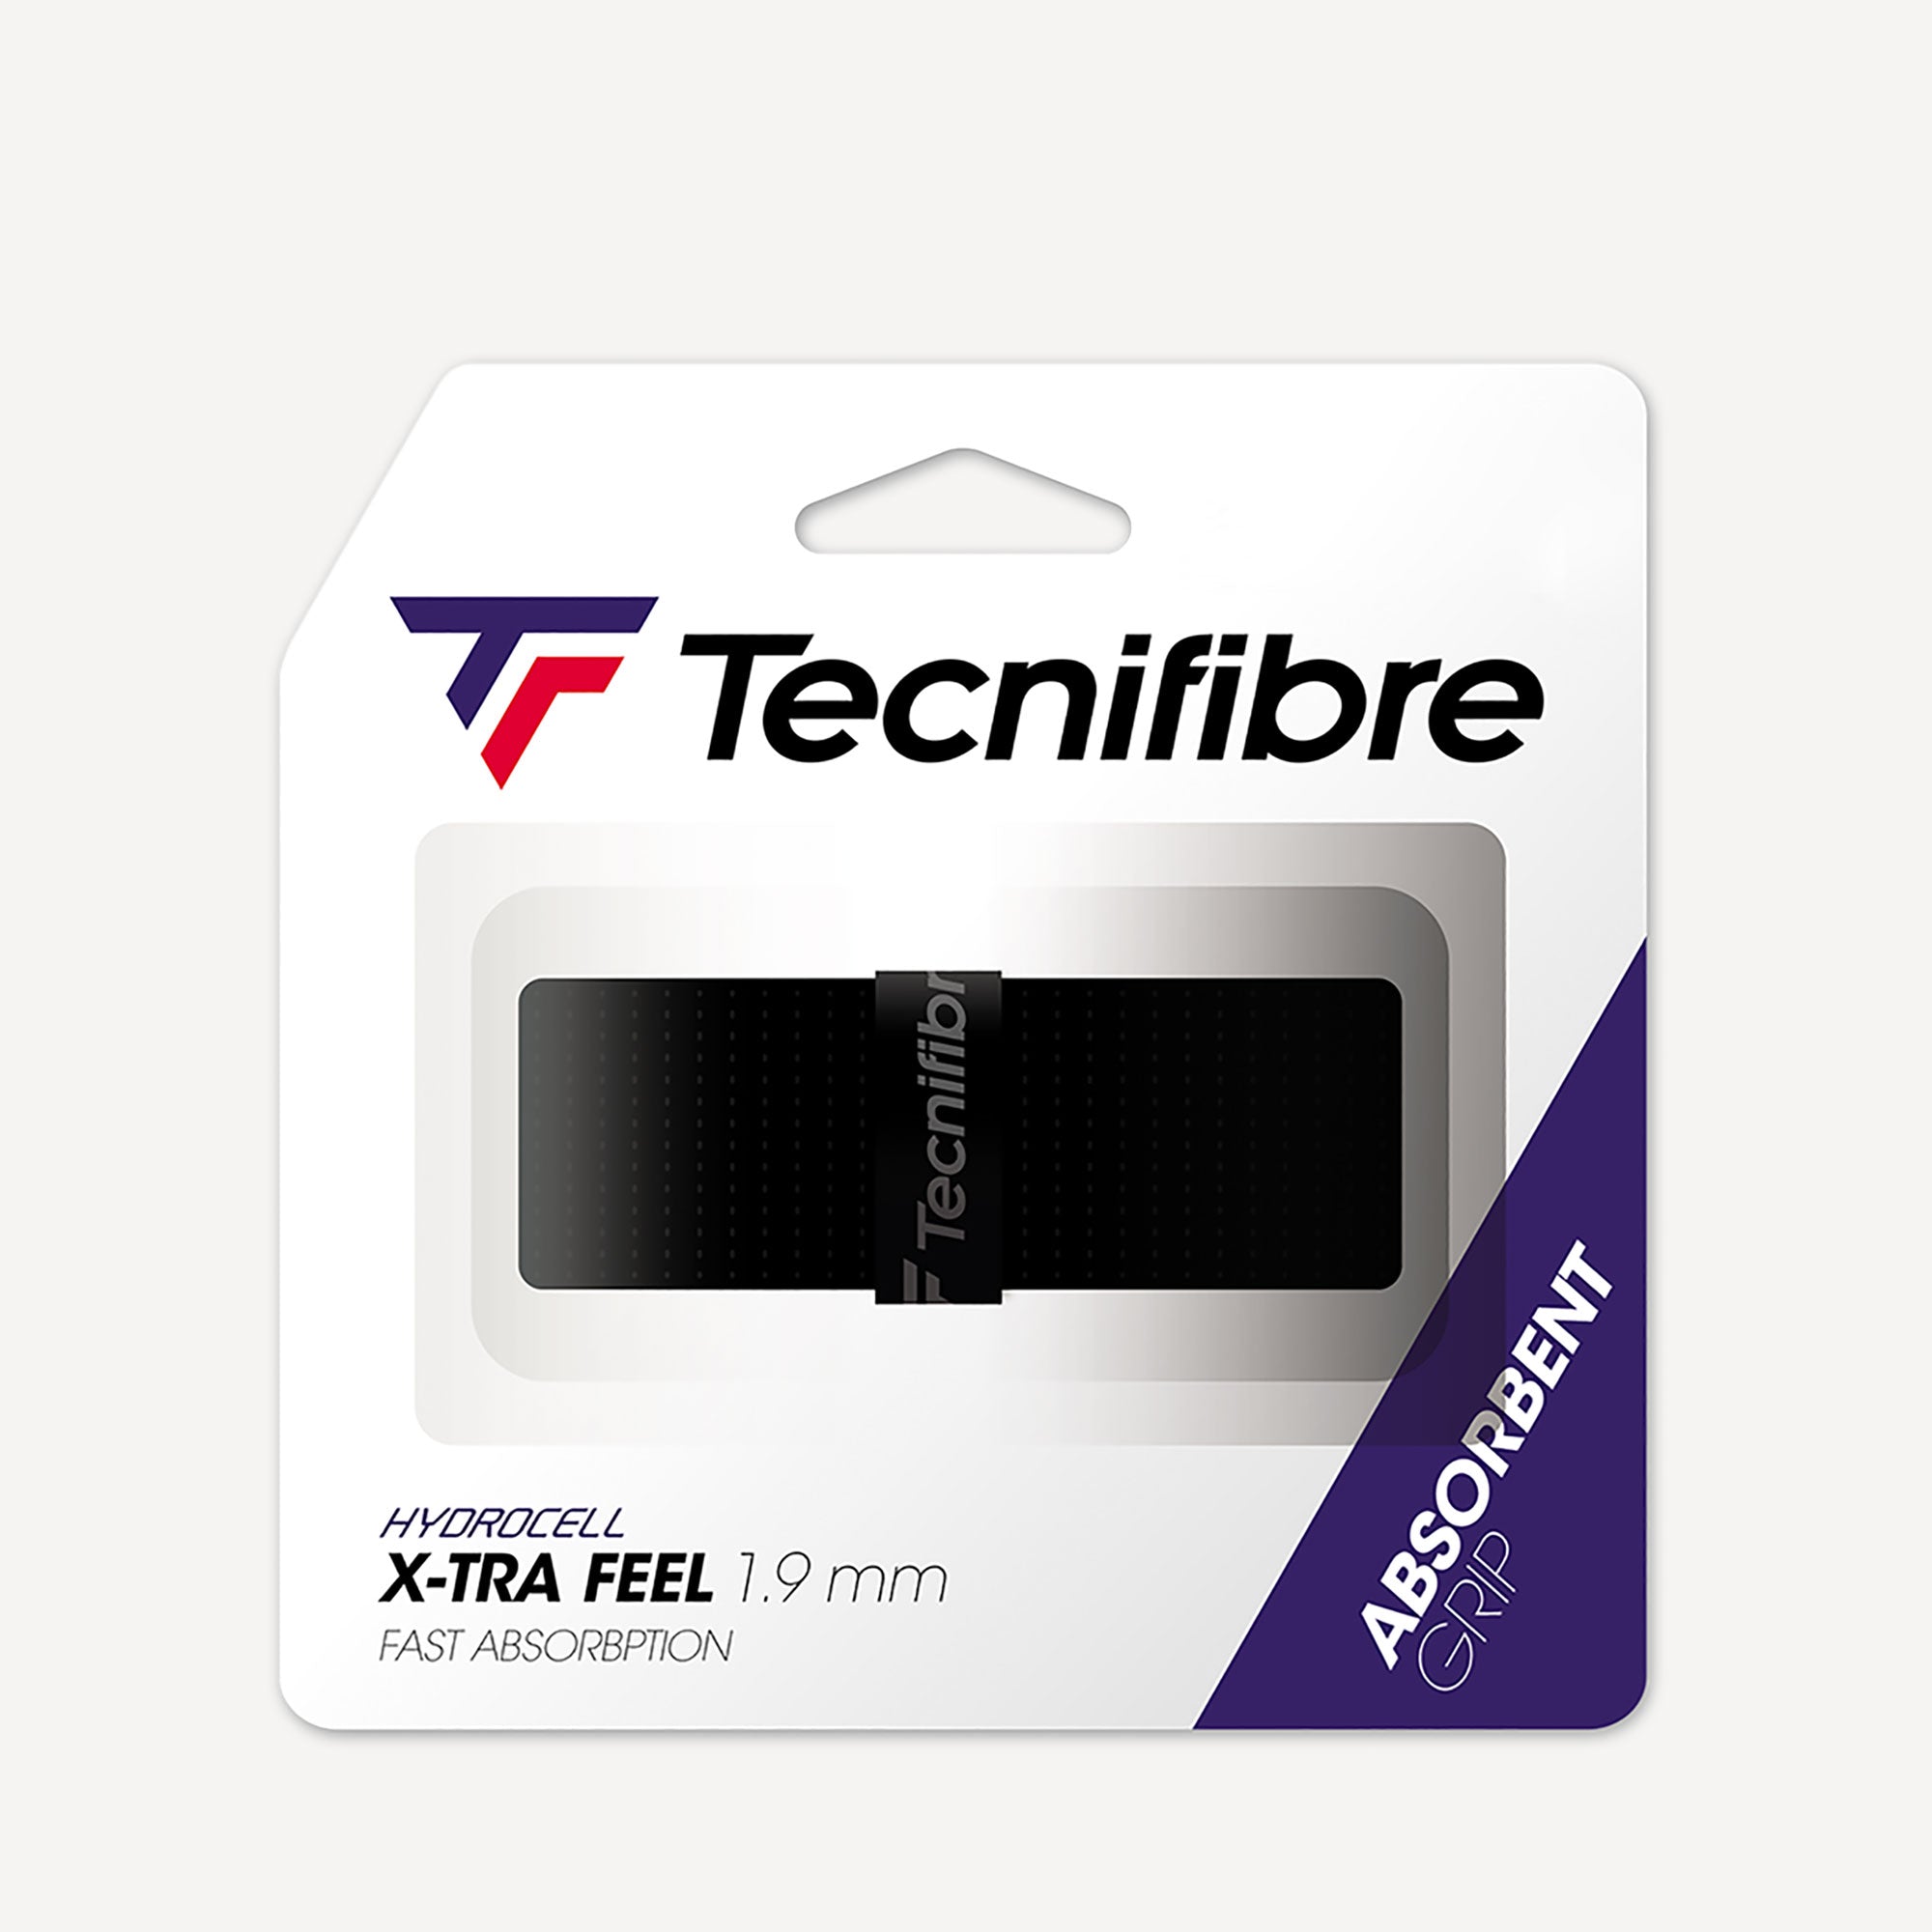 Tecnifibre Xtra Feel Replacement Grip - Black (1)